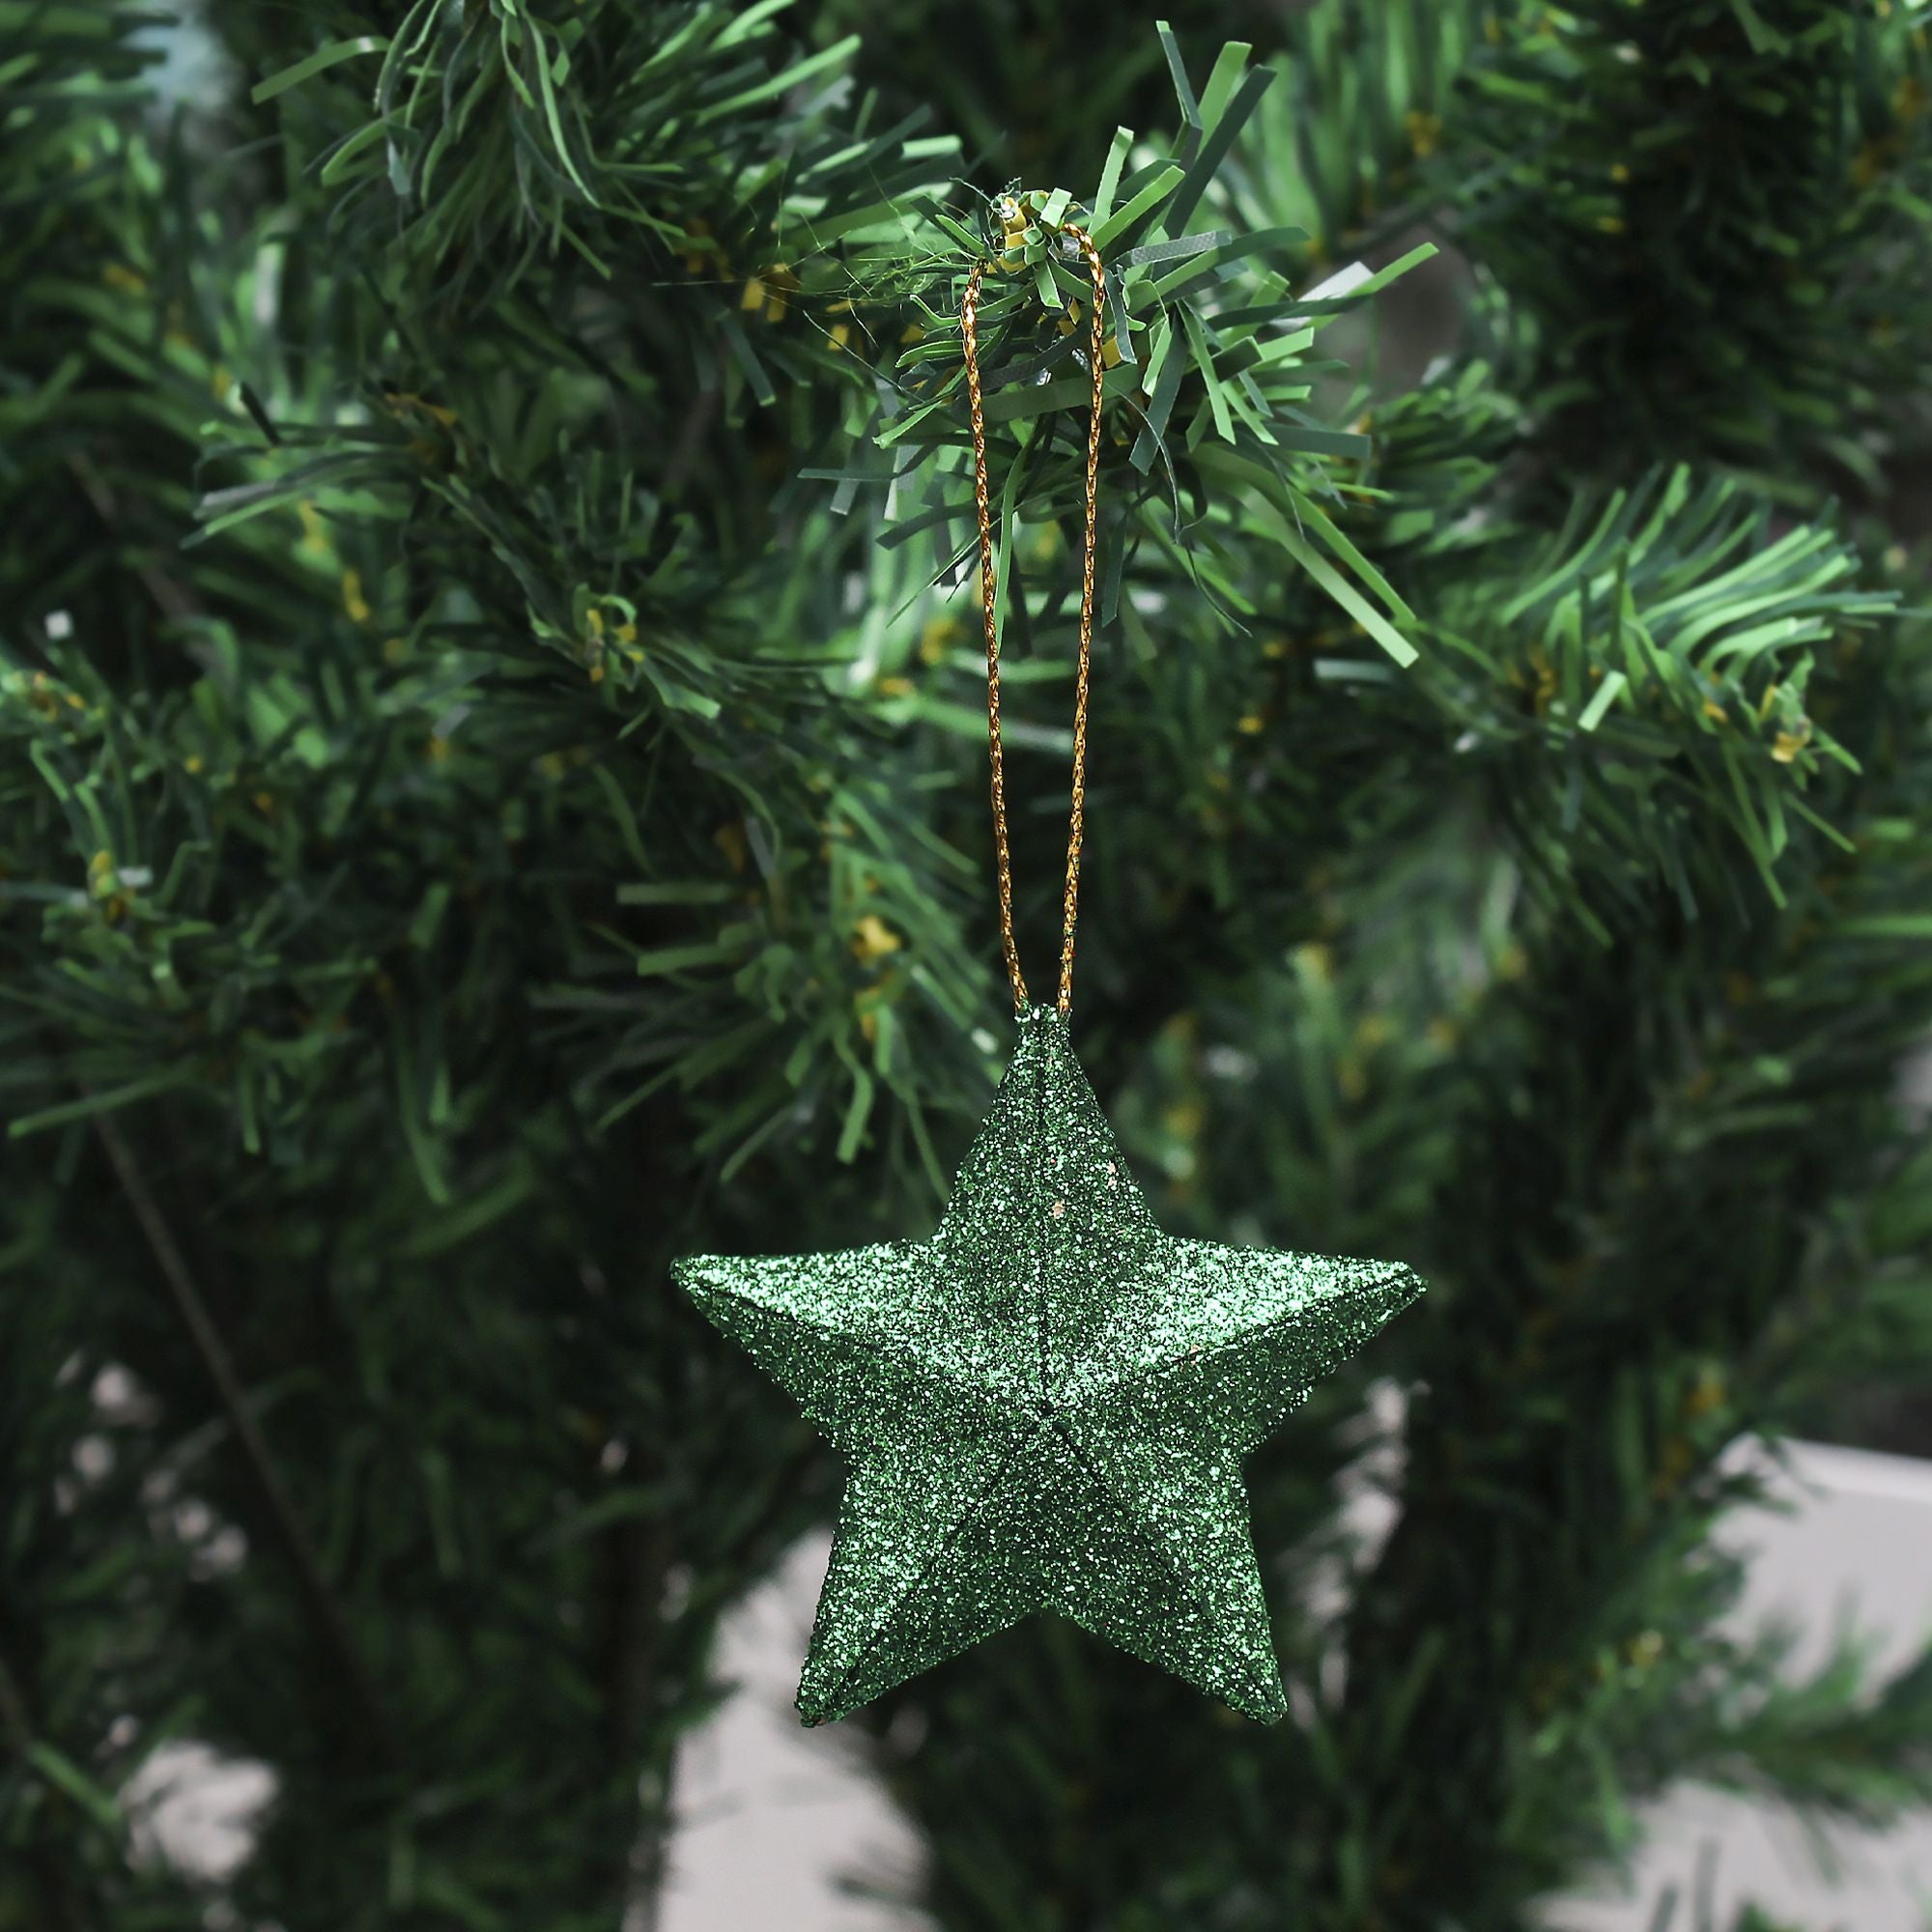 Handmade Christmas Ornaments - 3D Glitter Stars, 3.25inch, Green, 4pc